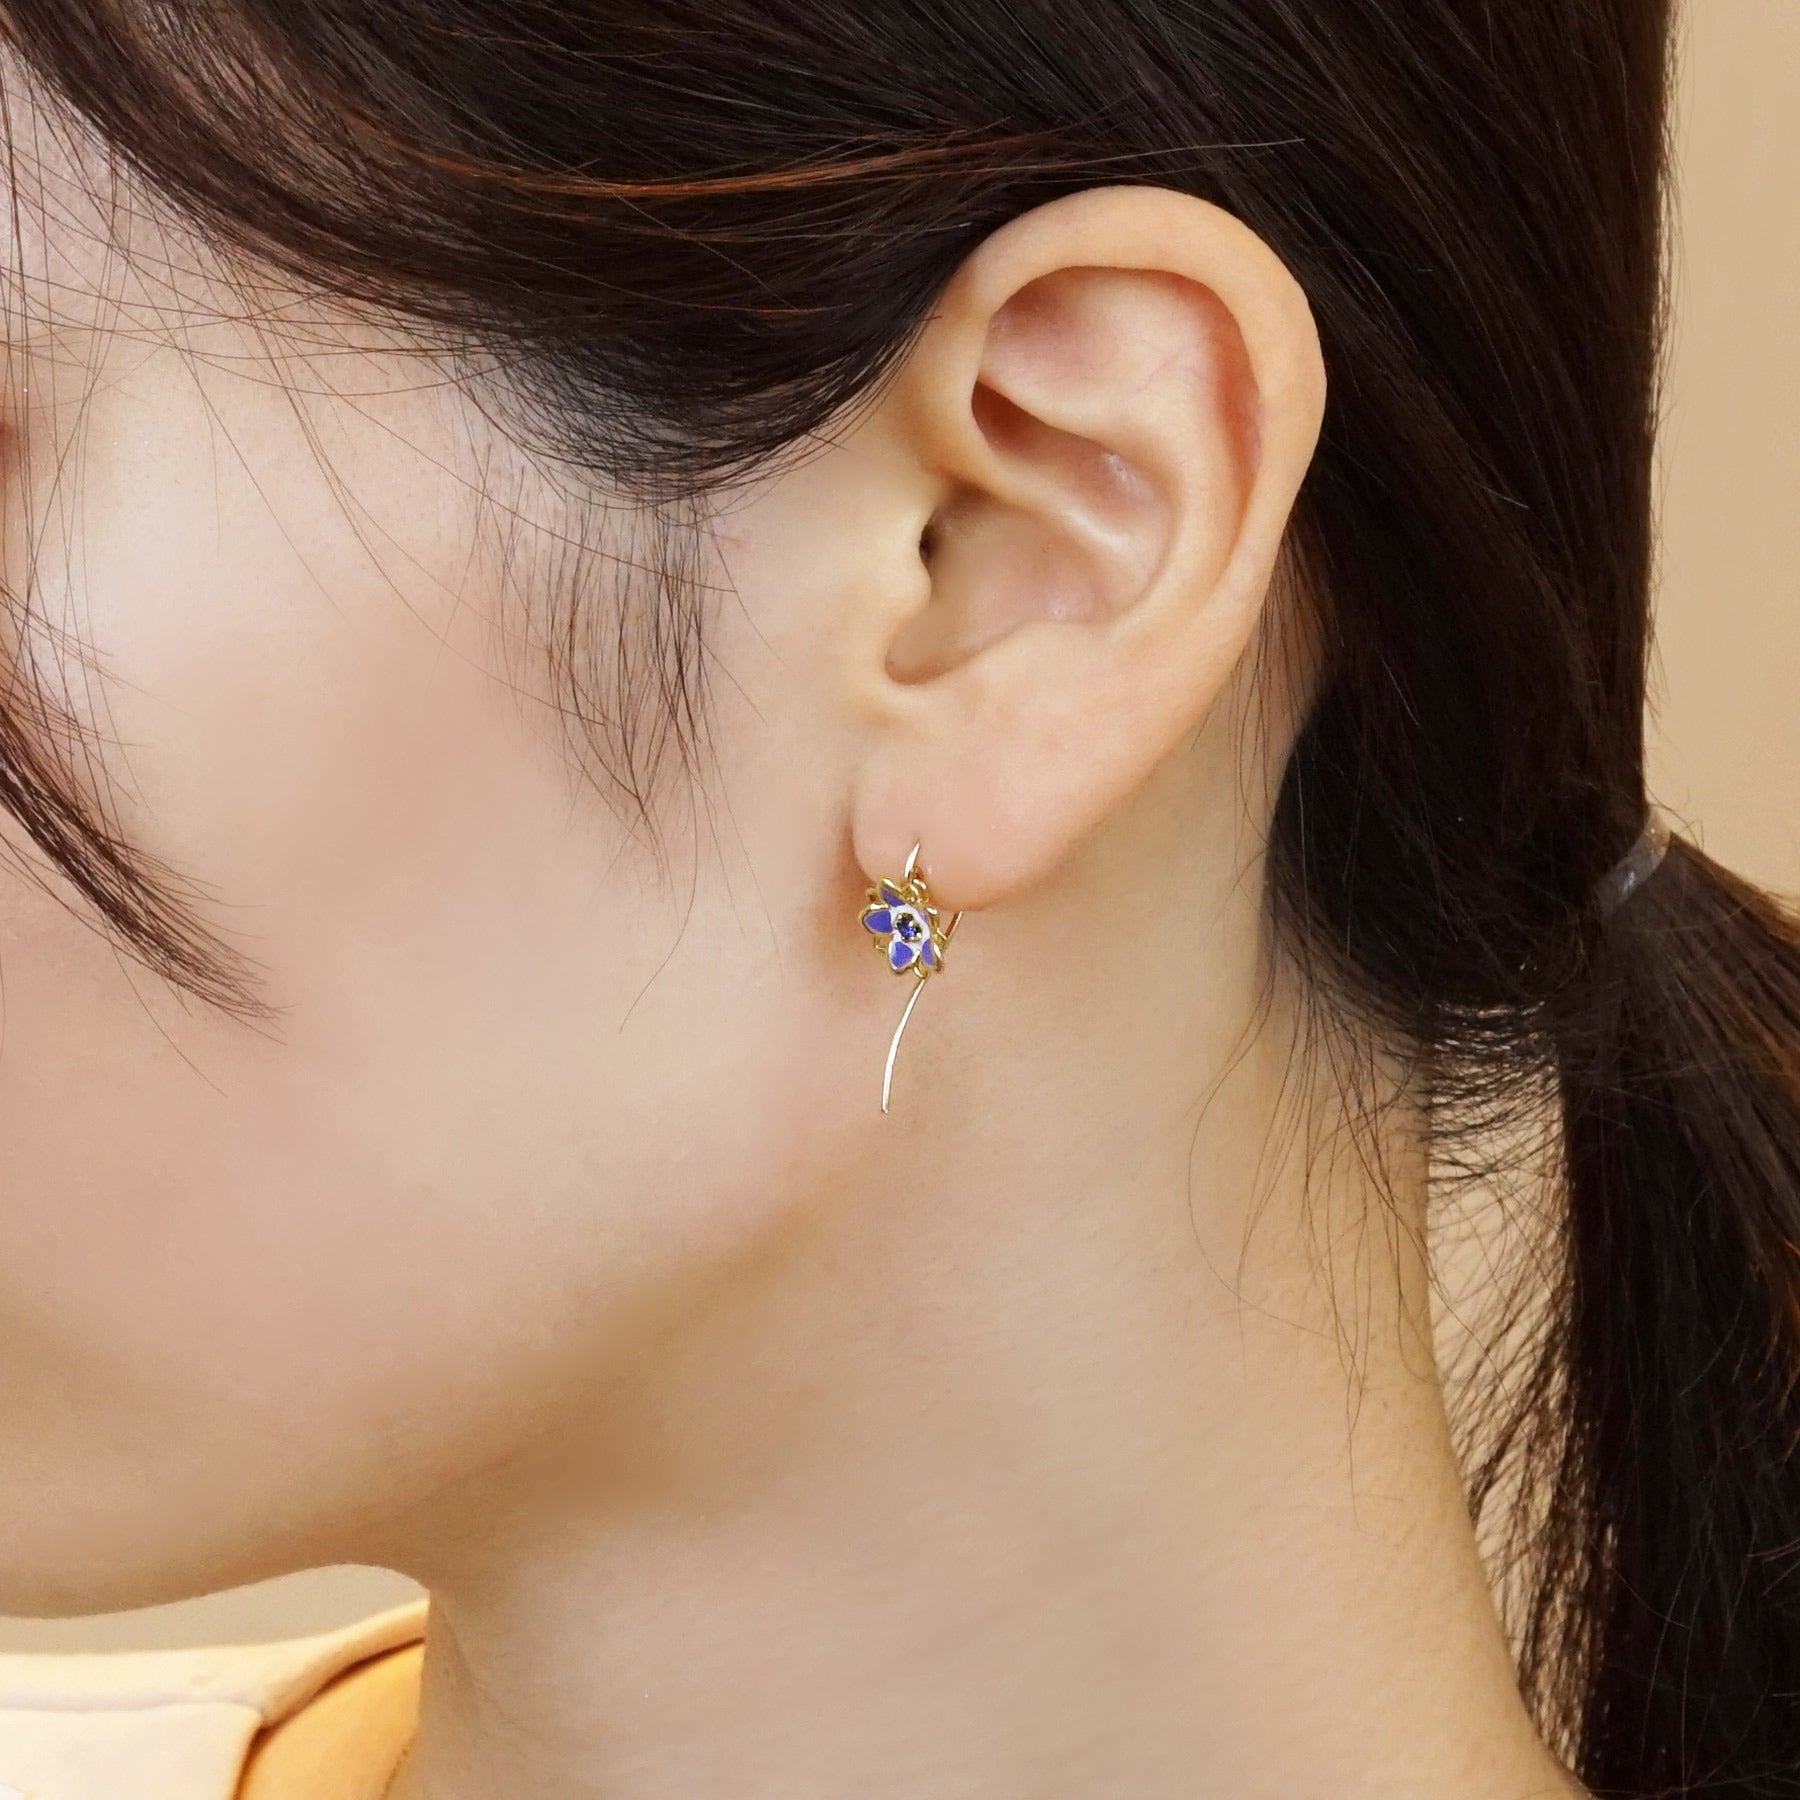 [Birth Flower Jewelry] September - Gentian Earrings (925 Sterling Silver / Gold Filled) - Model Image